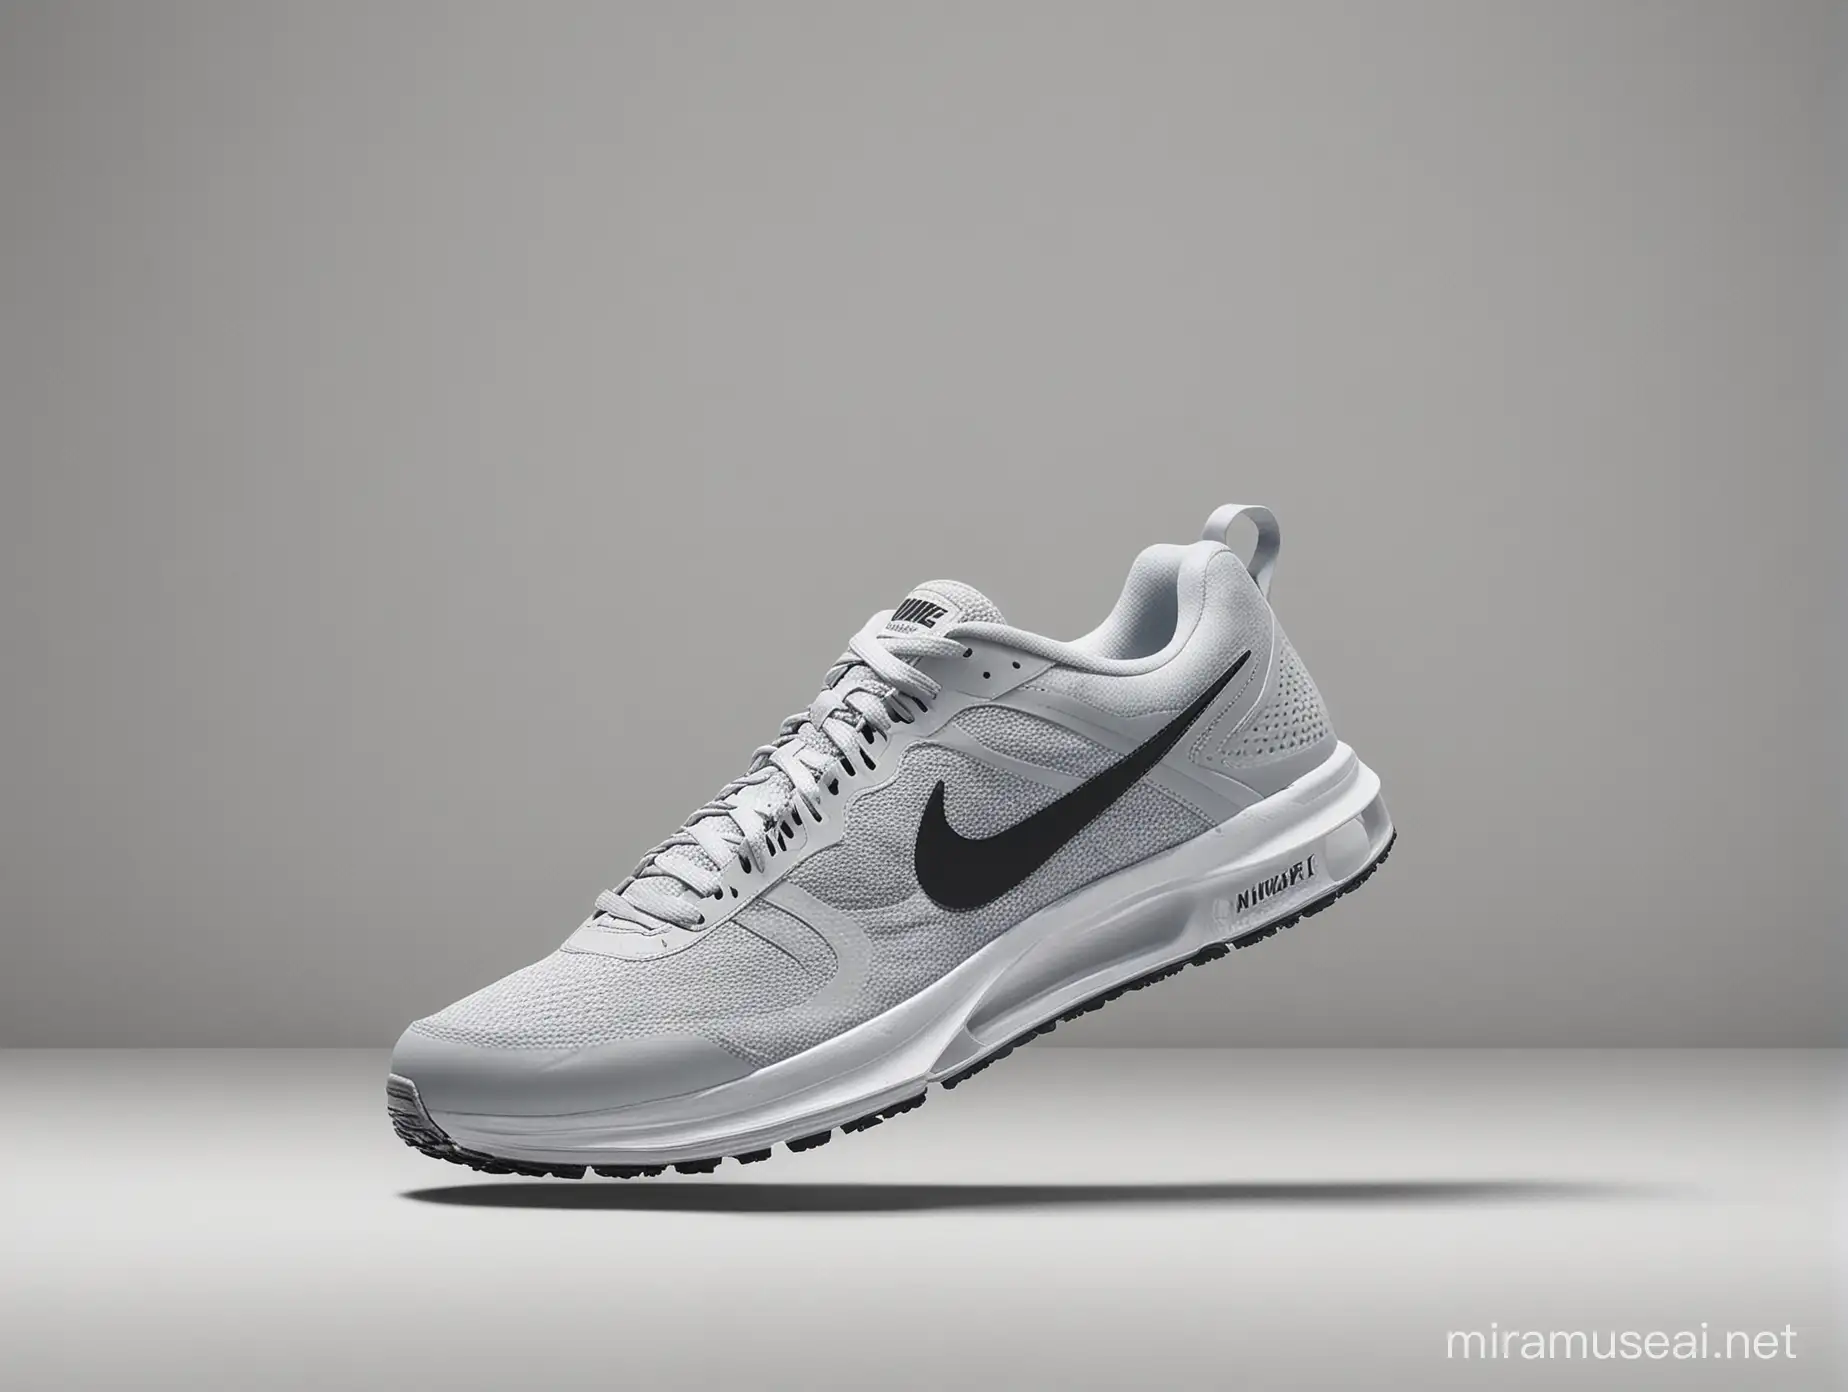 Nike Running Shoes on Light Grey Background